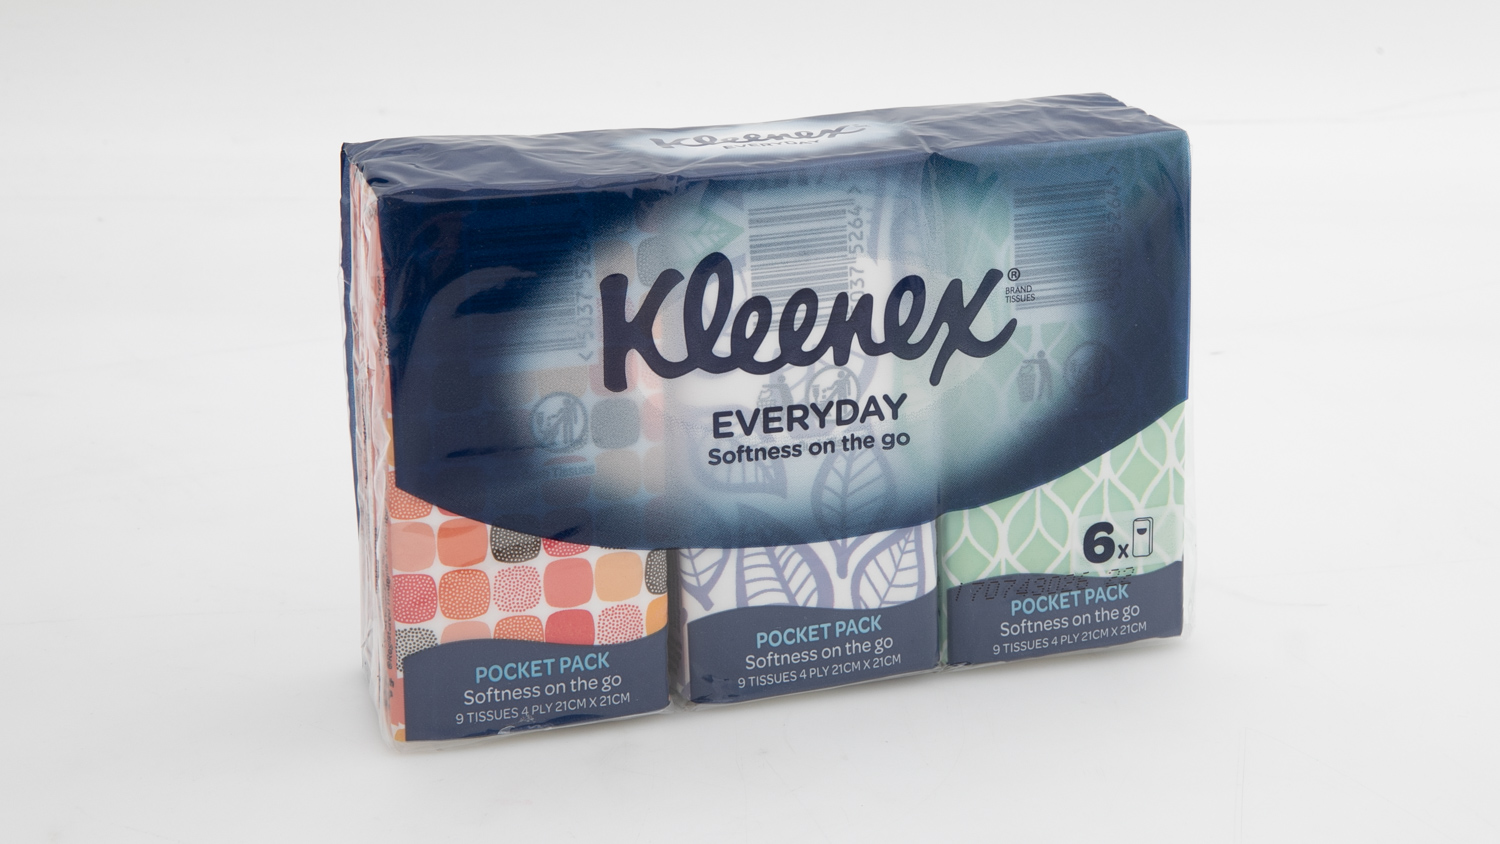 Kleenex Everyday Softness on the Go Pocket Pack 4 ply 9 tissues carousel image